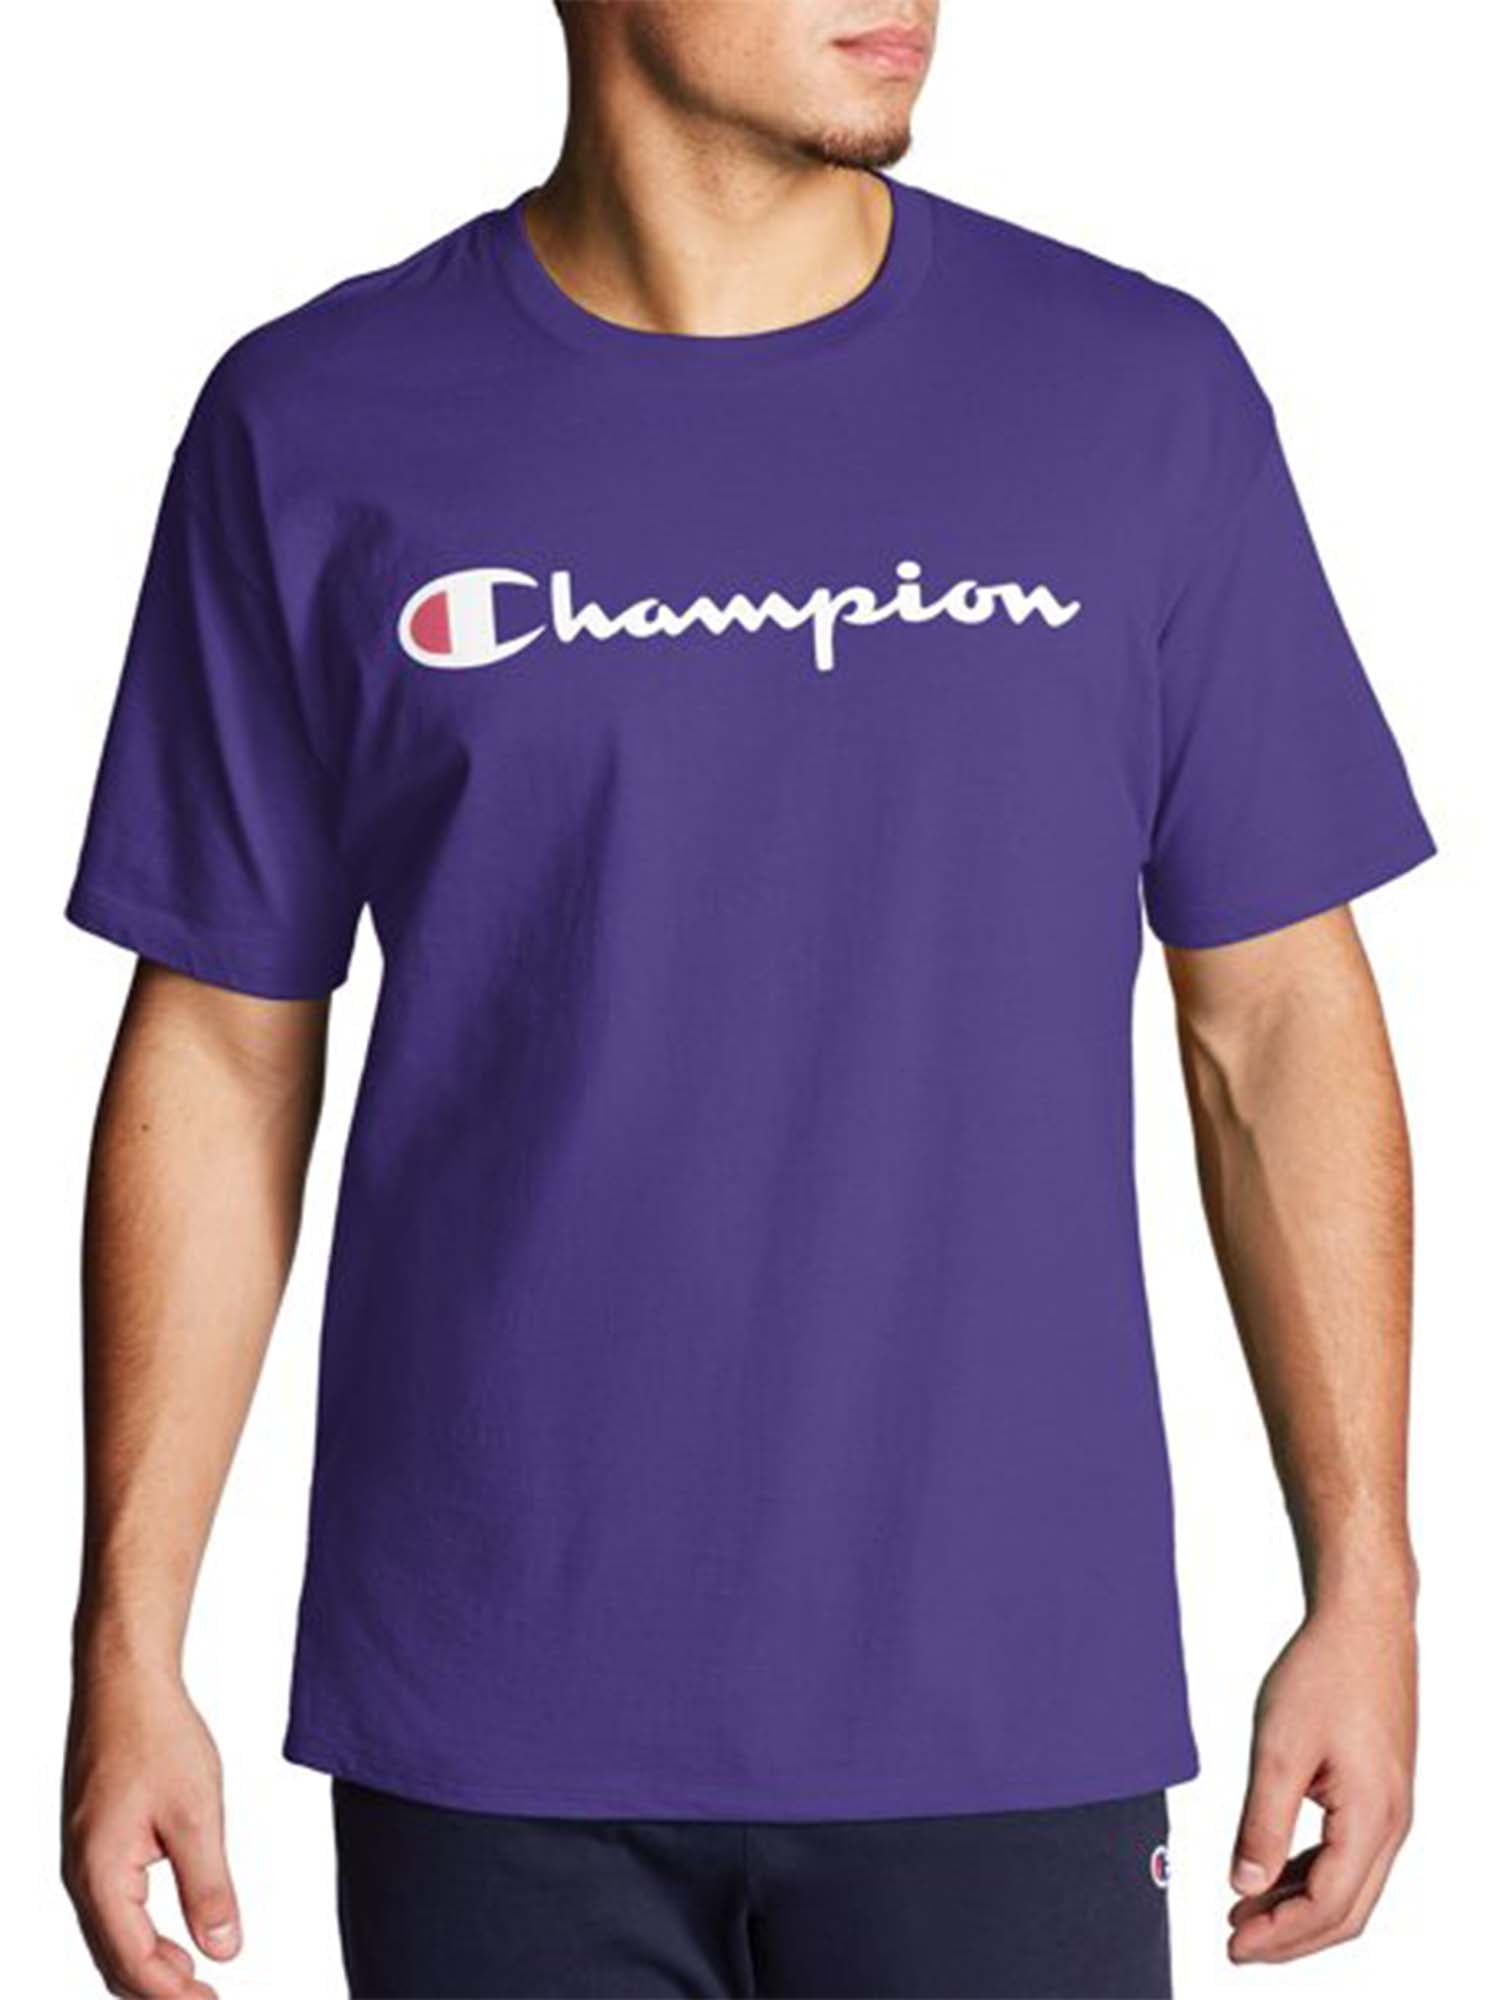 Men's Purple Graphic & Logo Tees